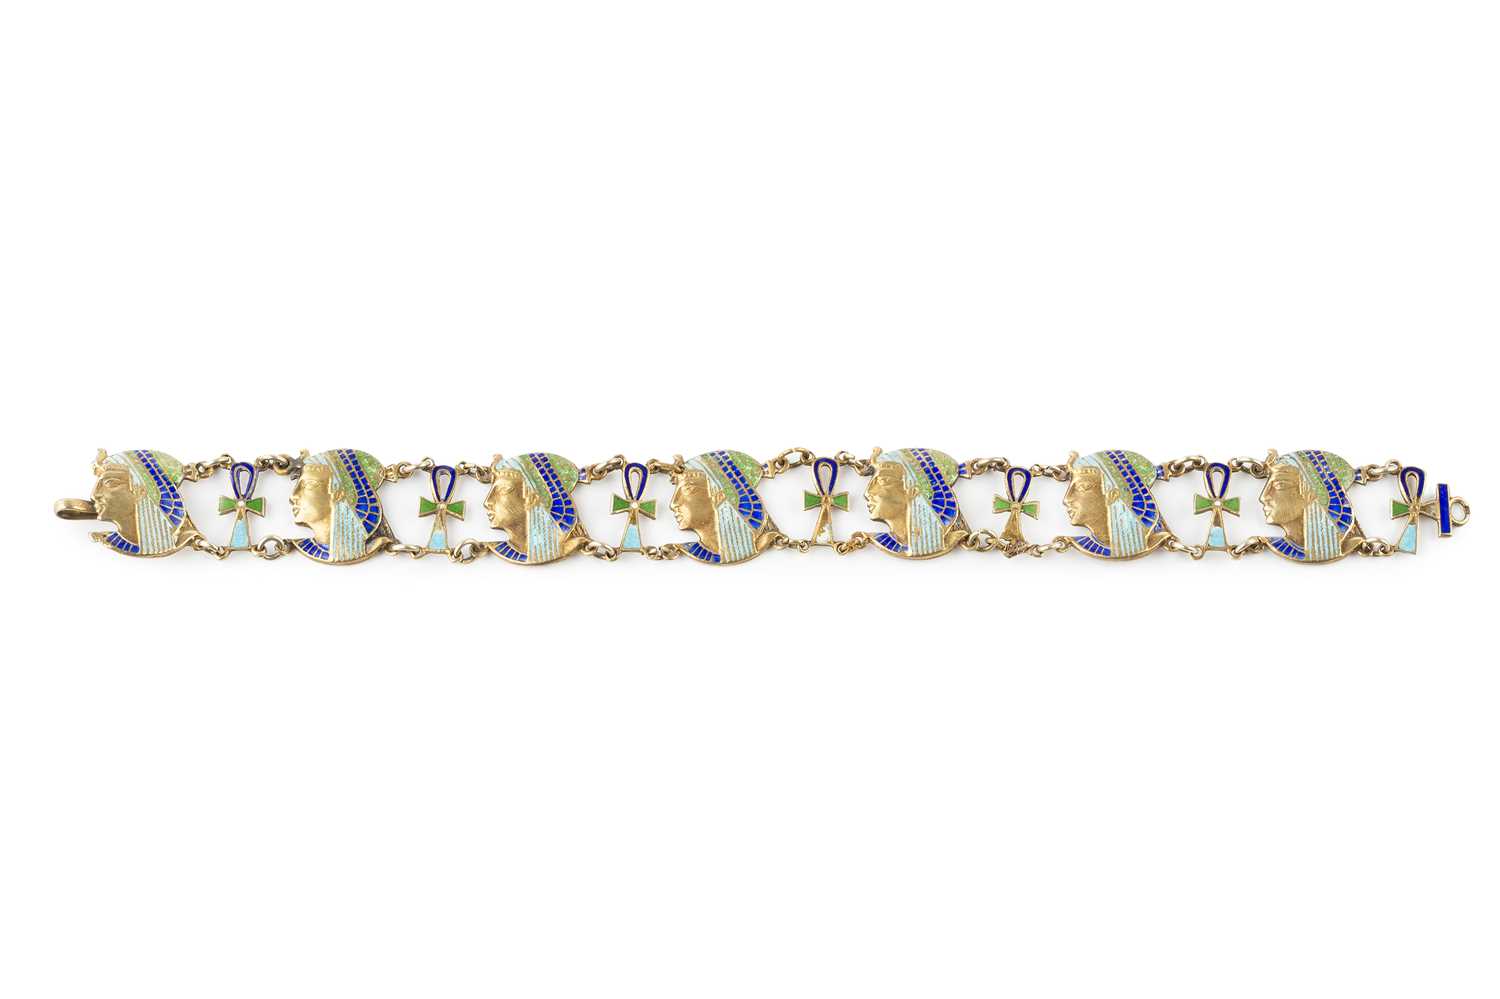 Bundle Lot of 36 Bracelets Costume Jewelry Crafting Beaded Bangle Women's |  eBay